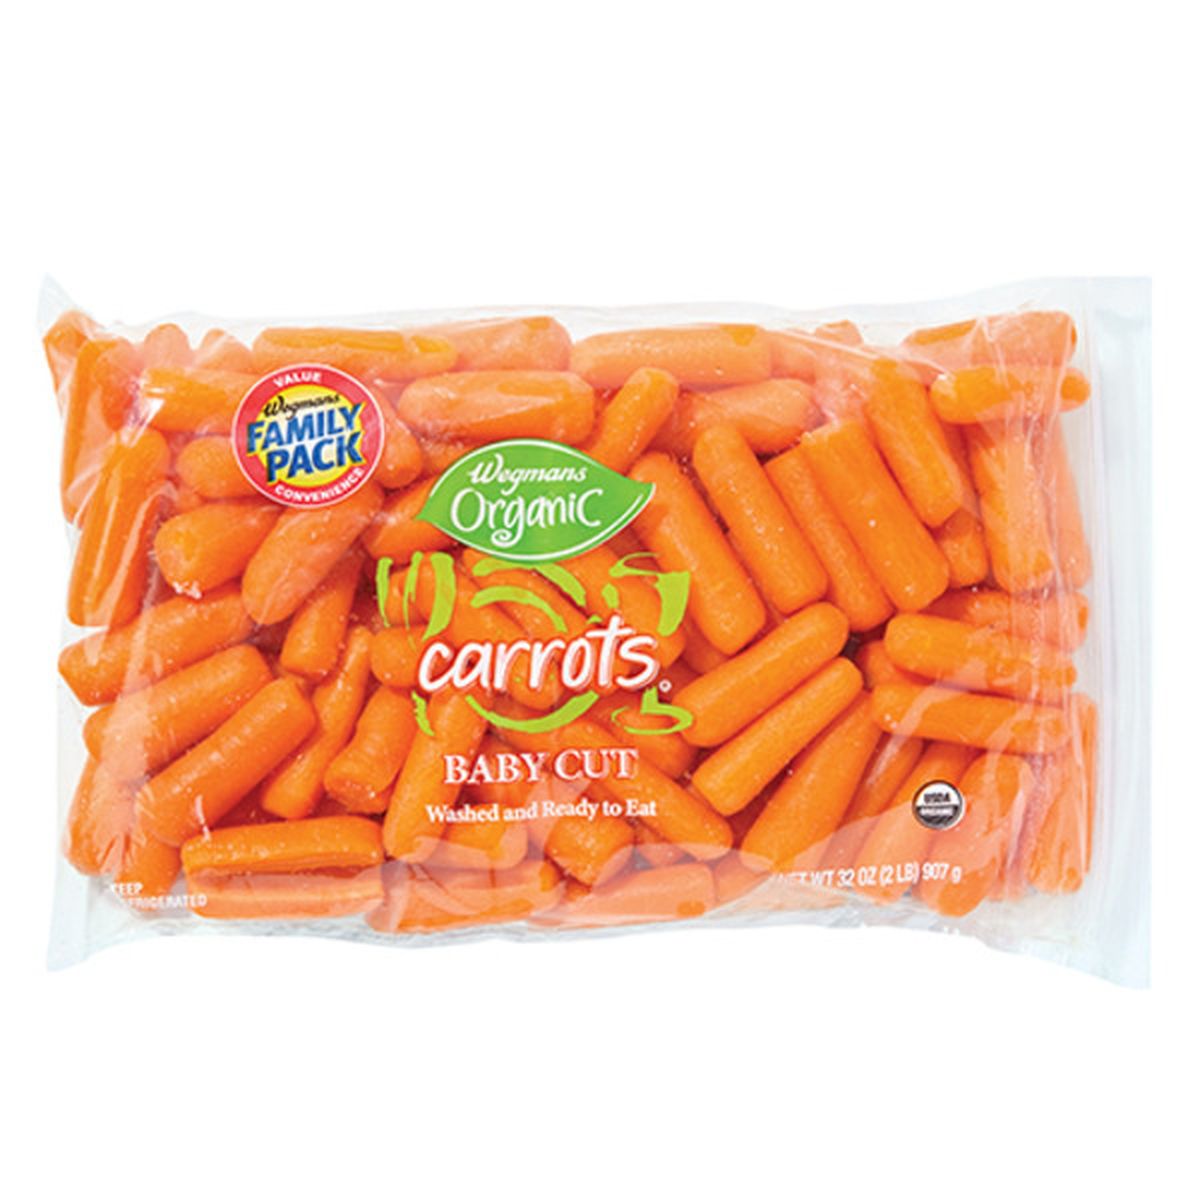 Calories in Wegmans Organic Baby Cut Carrots, FAMILY PACK